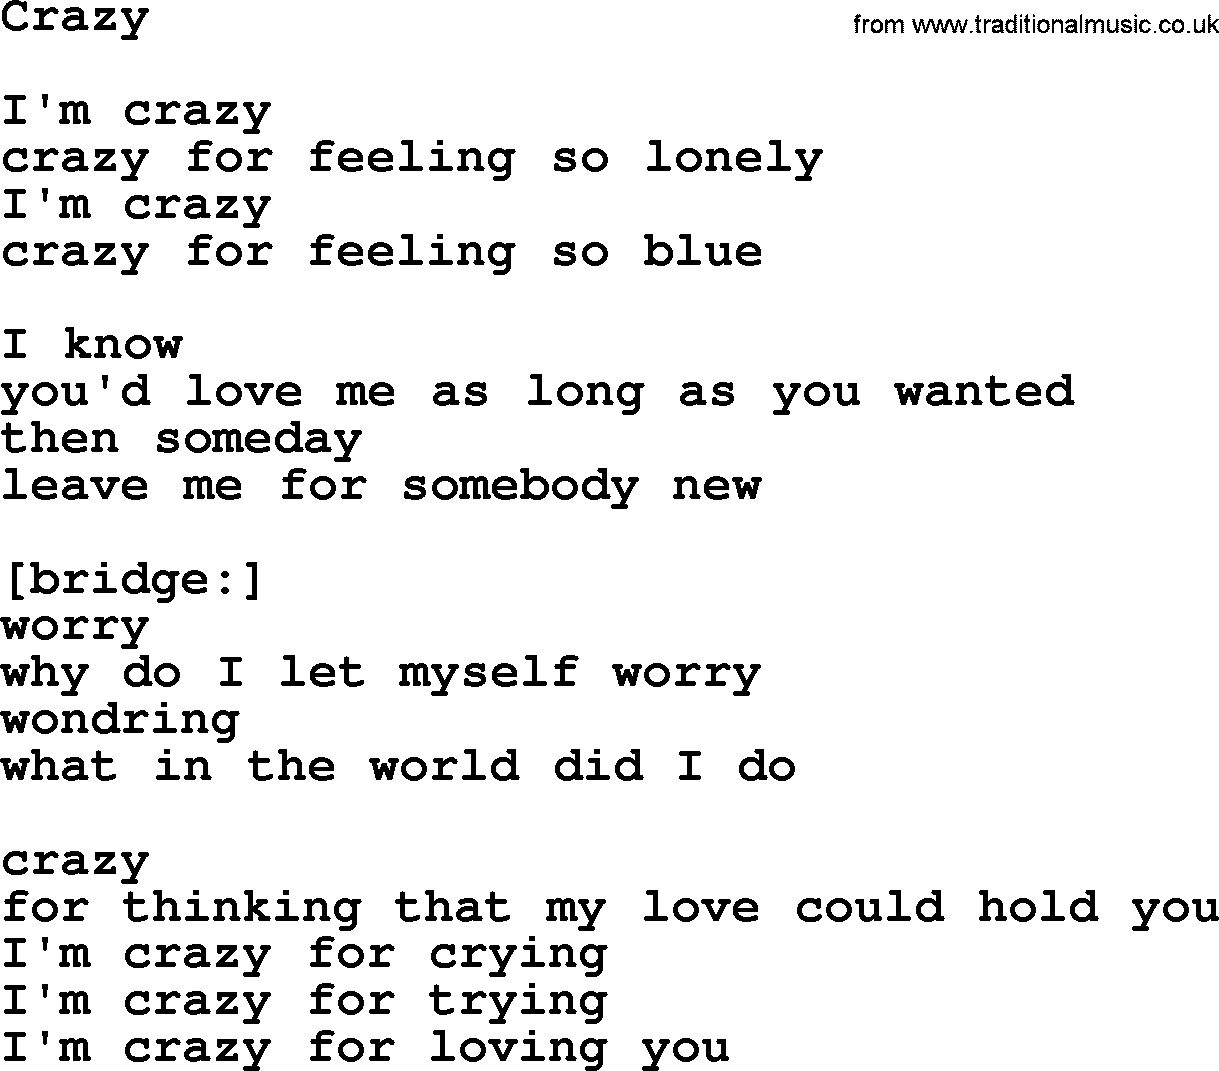 Willie Nelson song: Crazy lyrics